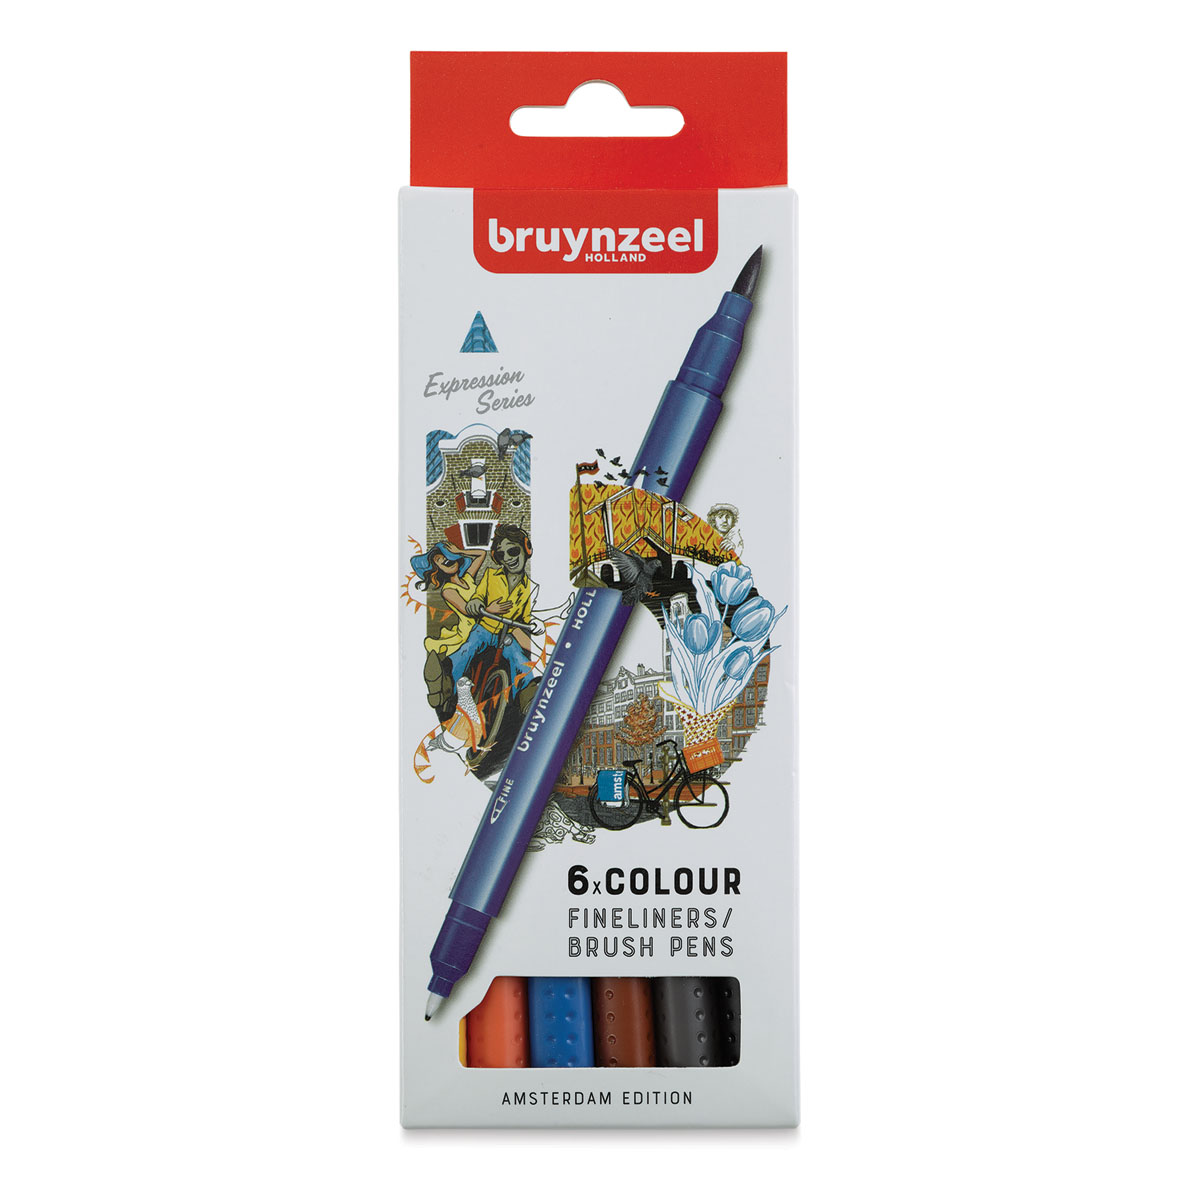 Bruynzeel Fineliner Brush Pen Sets